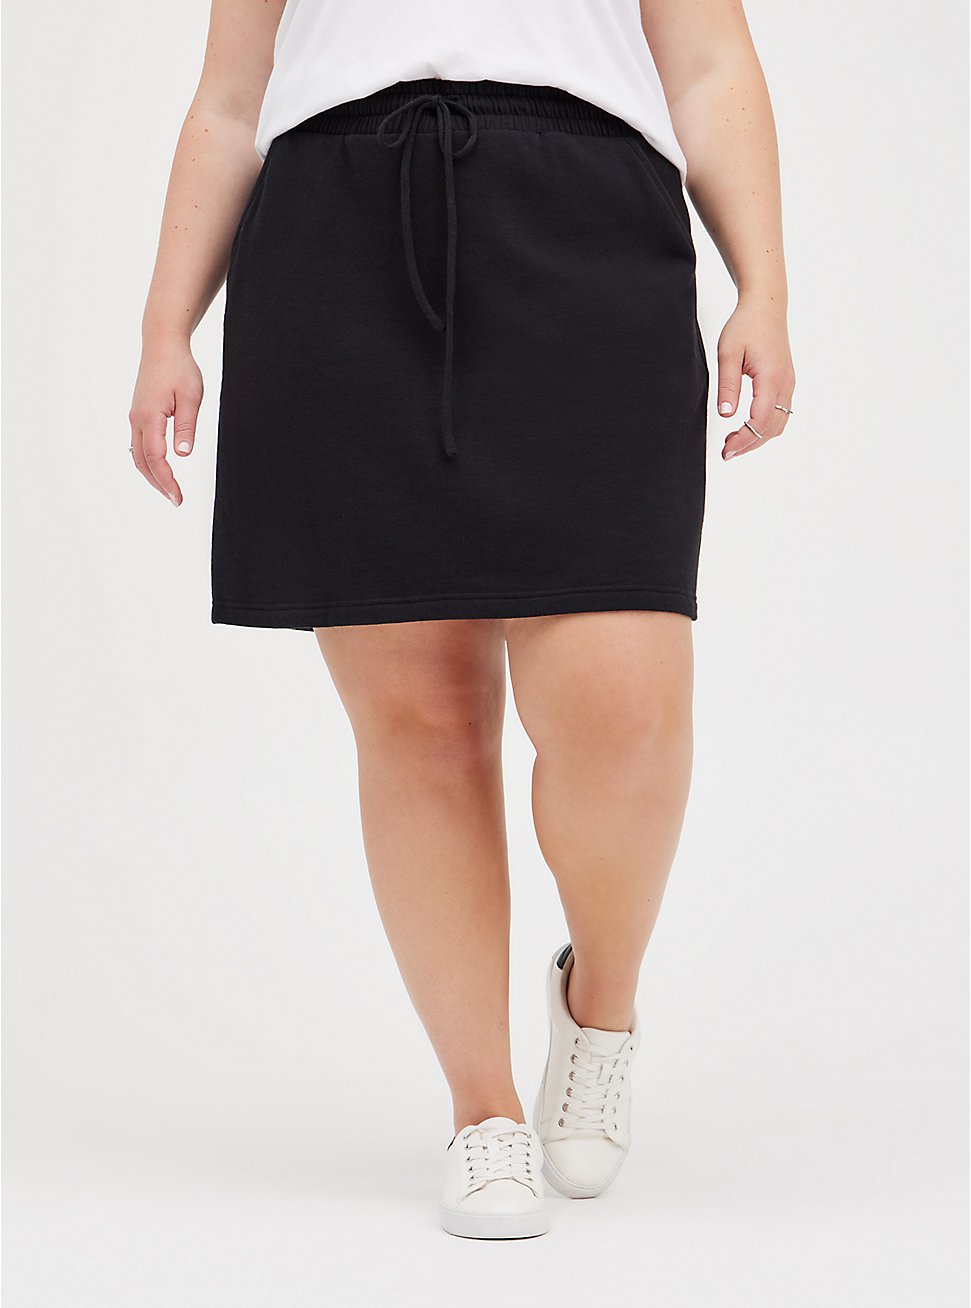 A-Line Mini Skirt - Fleece Black, DEEP BLACK, hi-res